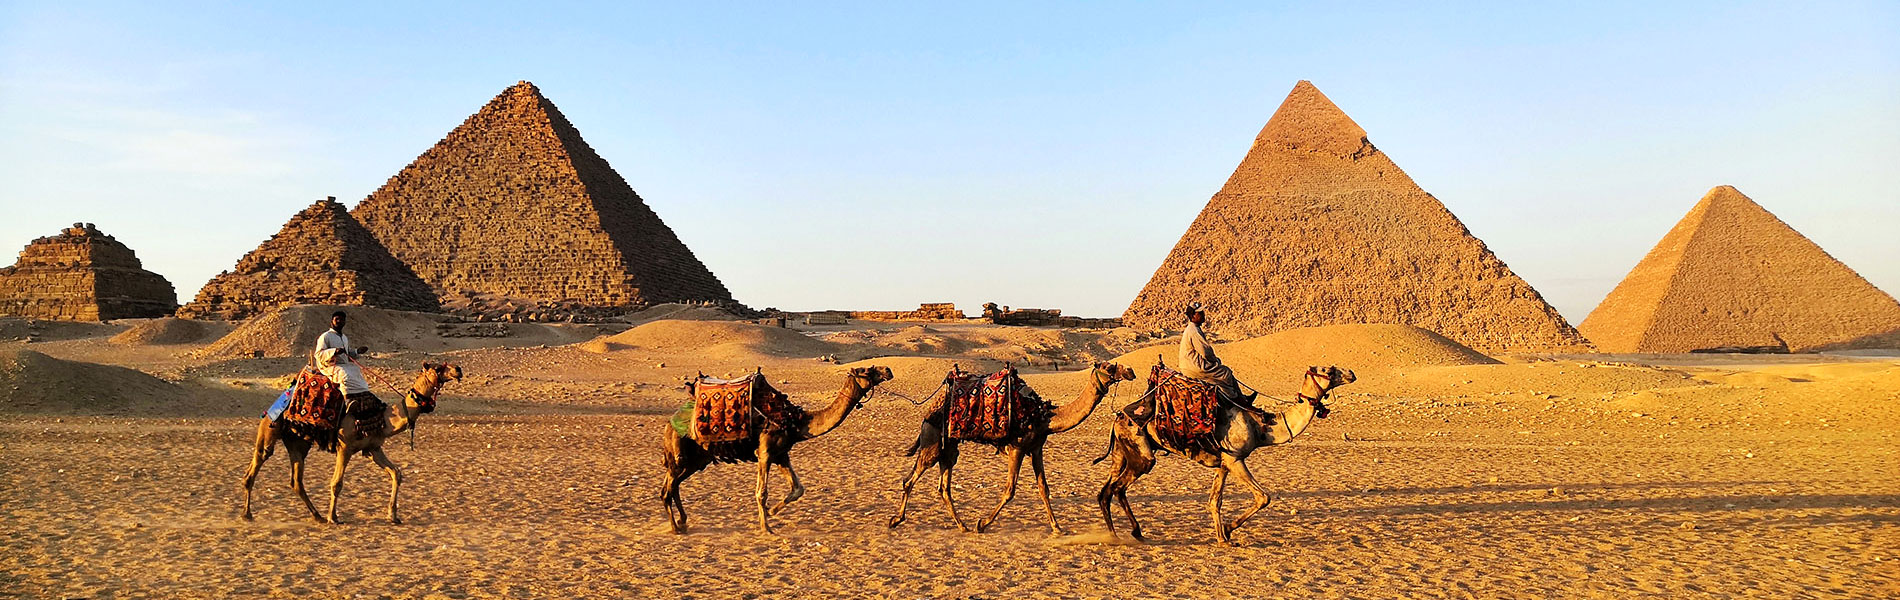 Egypt Pyramids in Cairo